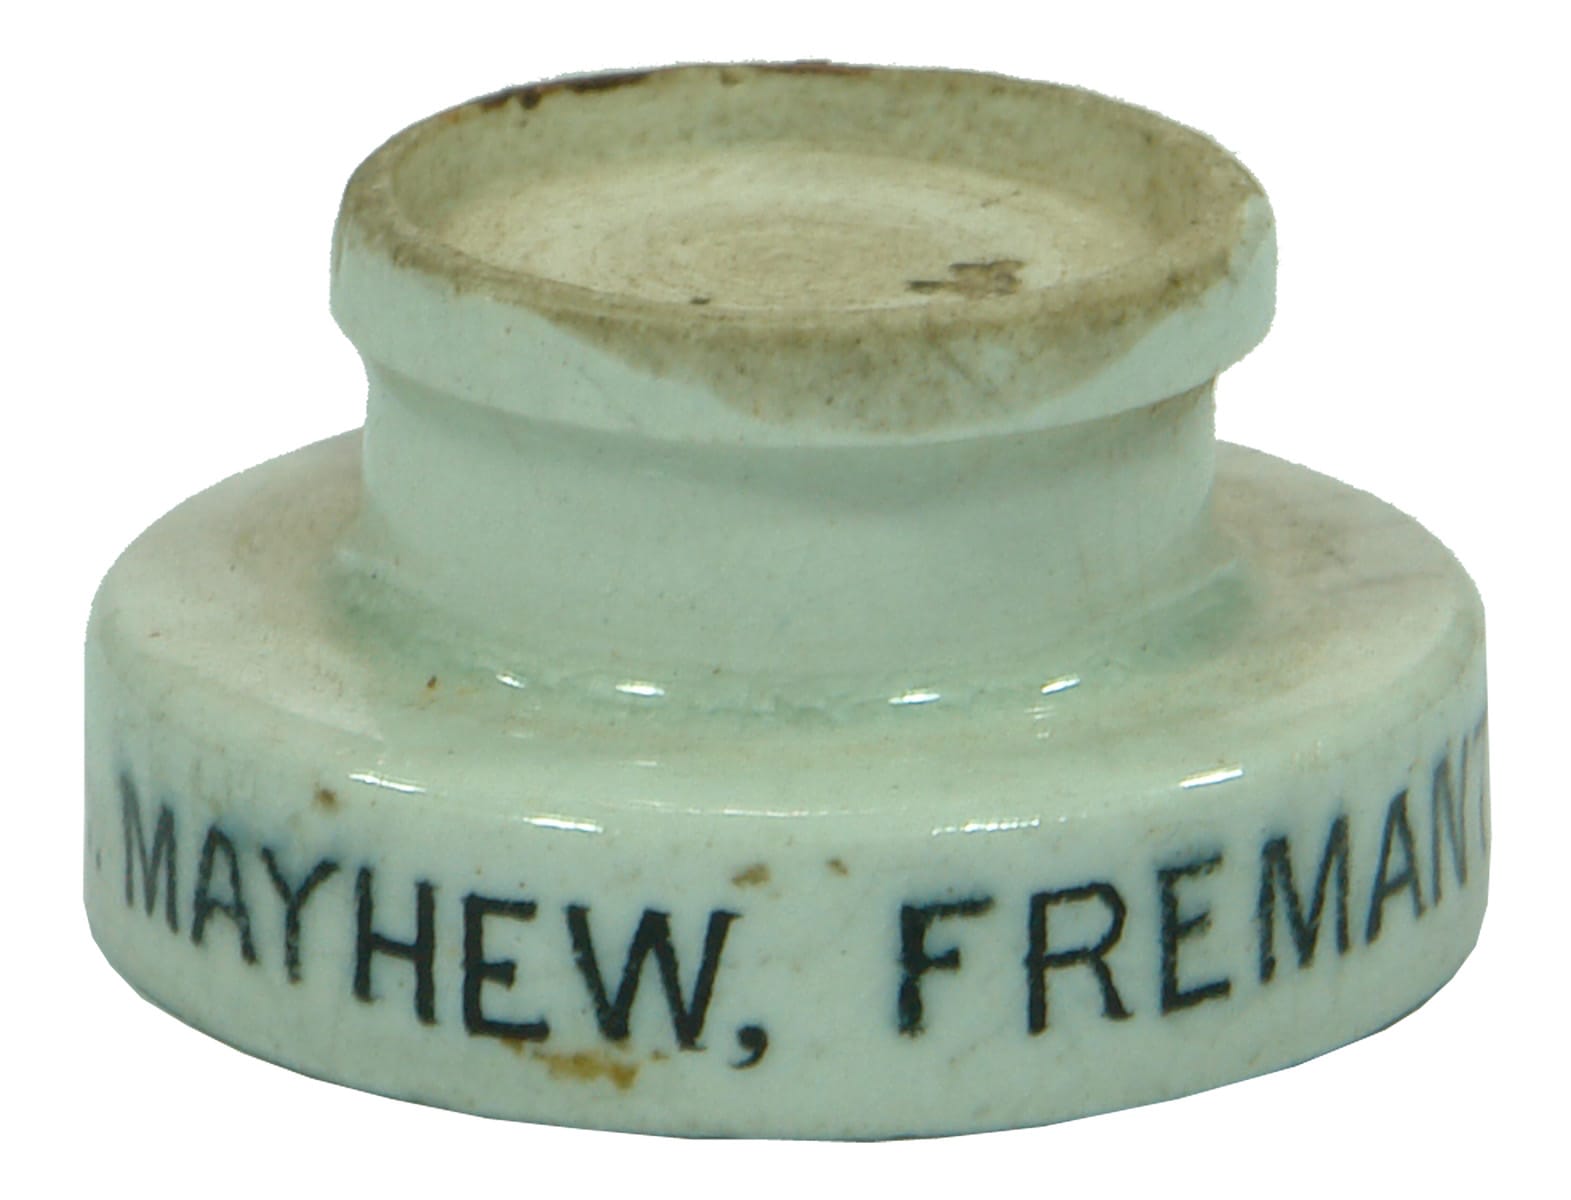 Mayhew Fremantle Pure Menthol Ceramic Applicator